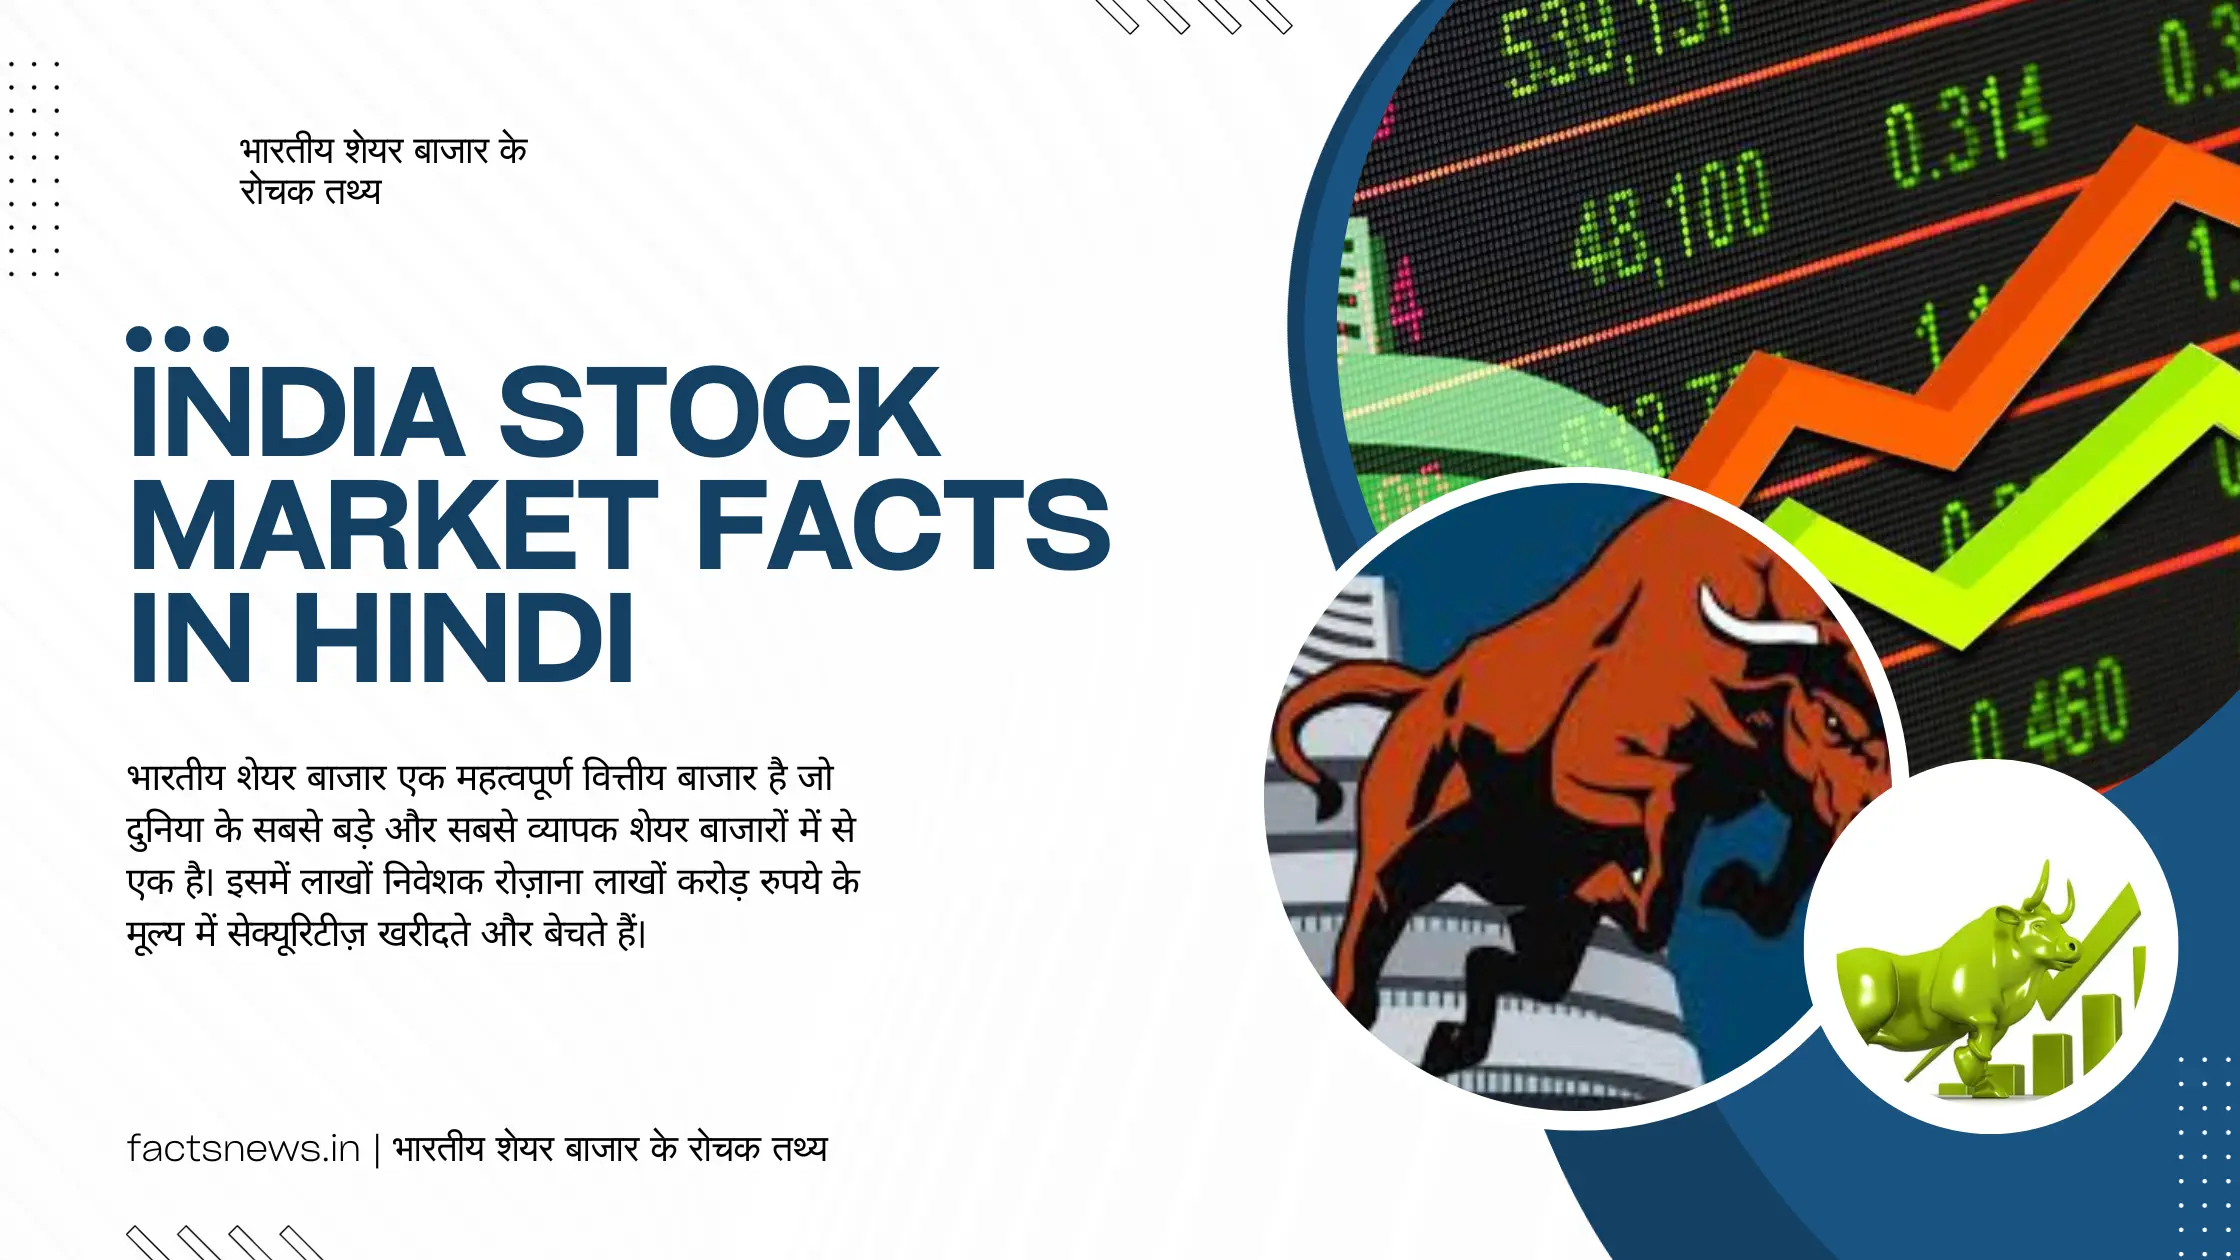 भारतीय शेयर बाजार के रोचक तथ्य | India Stock Market Facts In Hindi